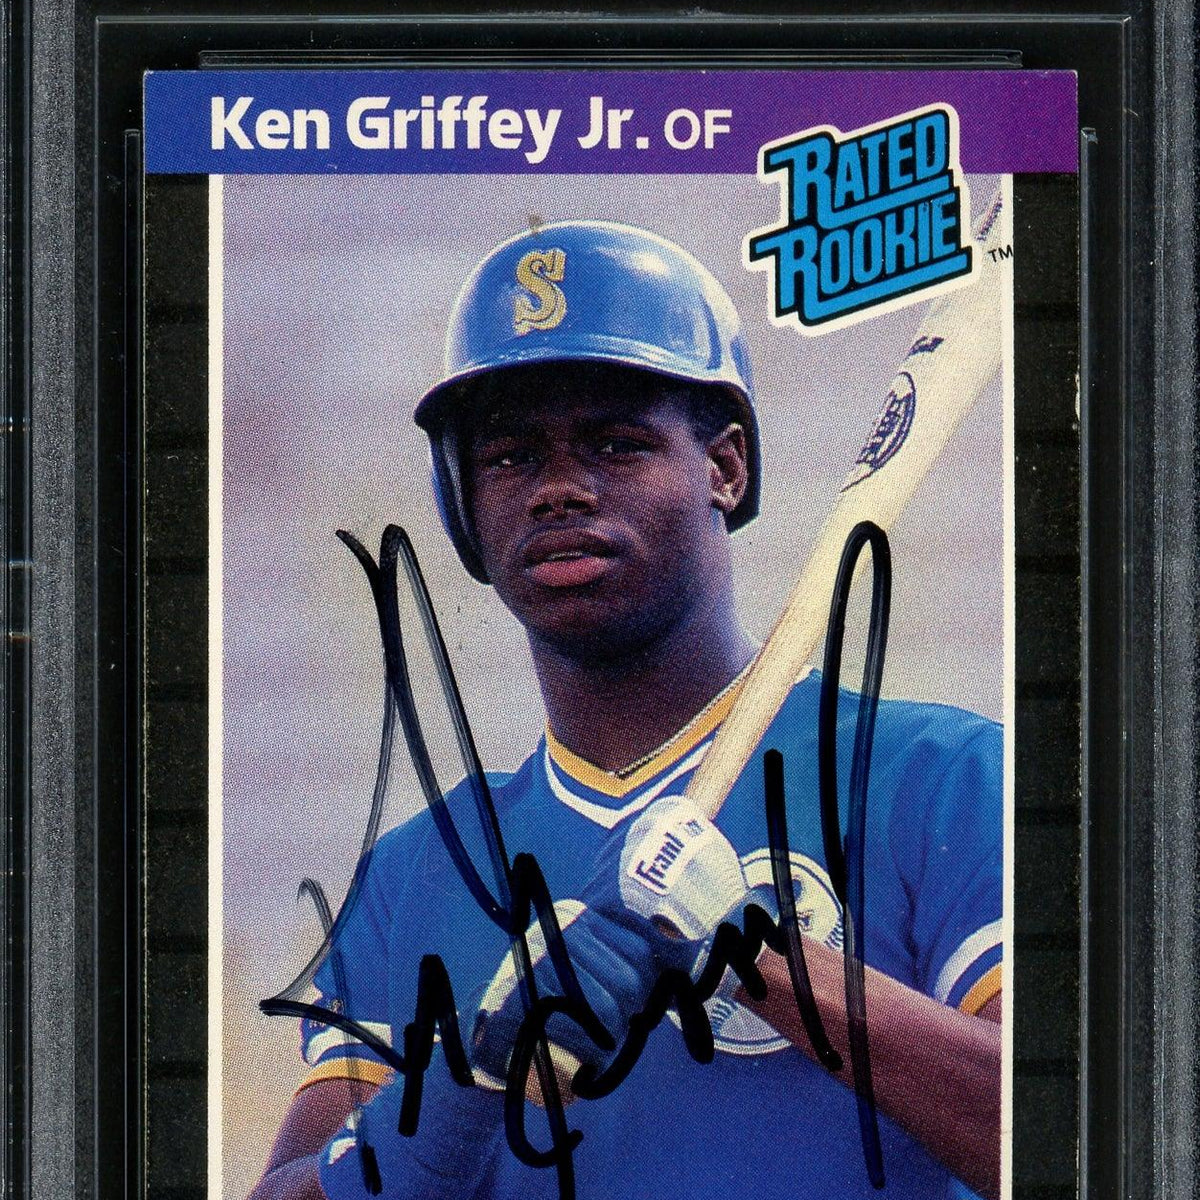 Ken Griffey Jr. Autographed 1989 Donruss Rookie Card #33 Seattle Marin — RSA